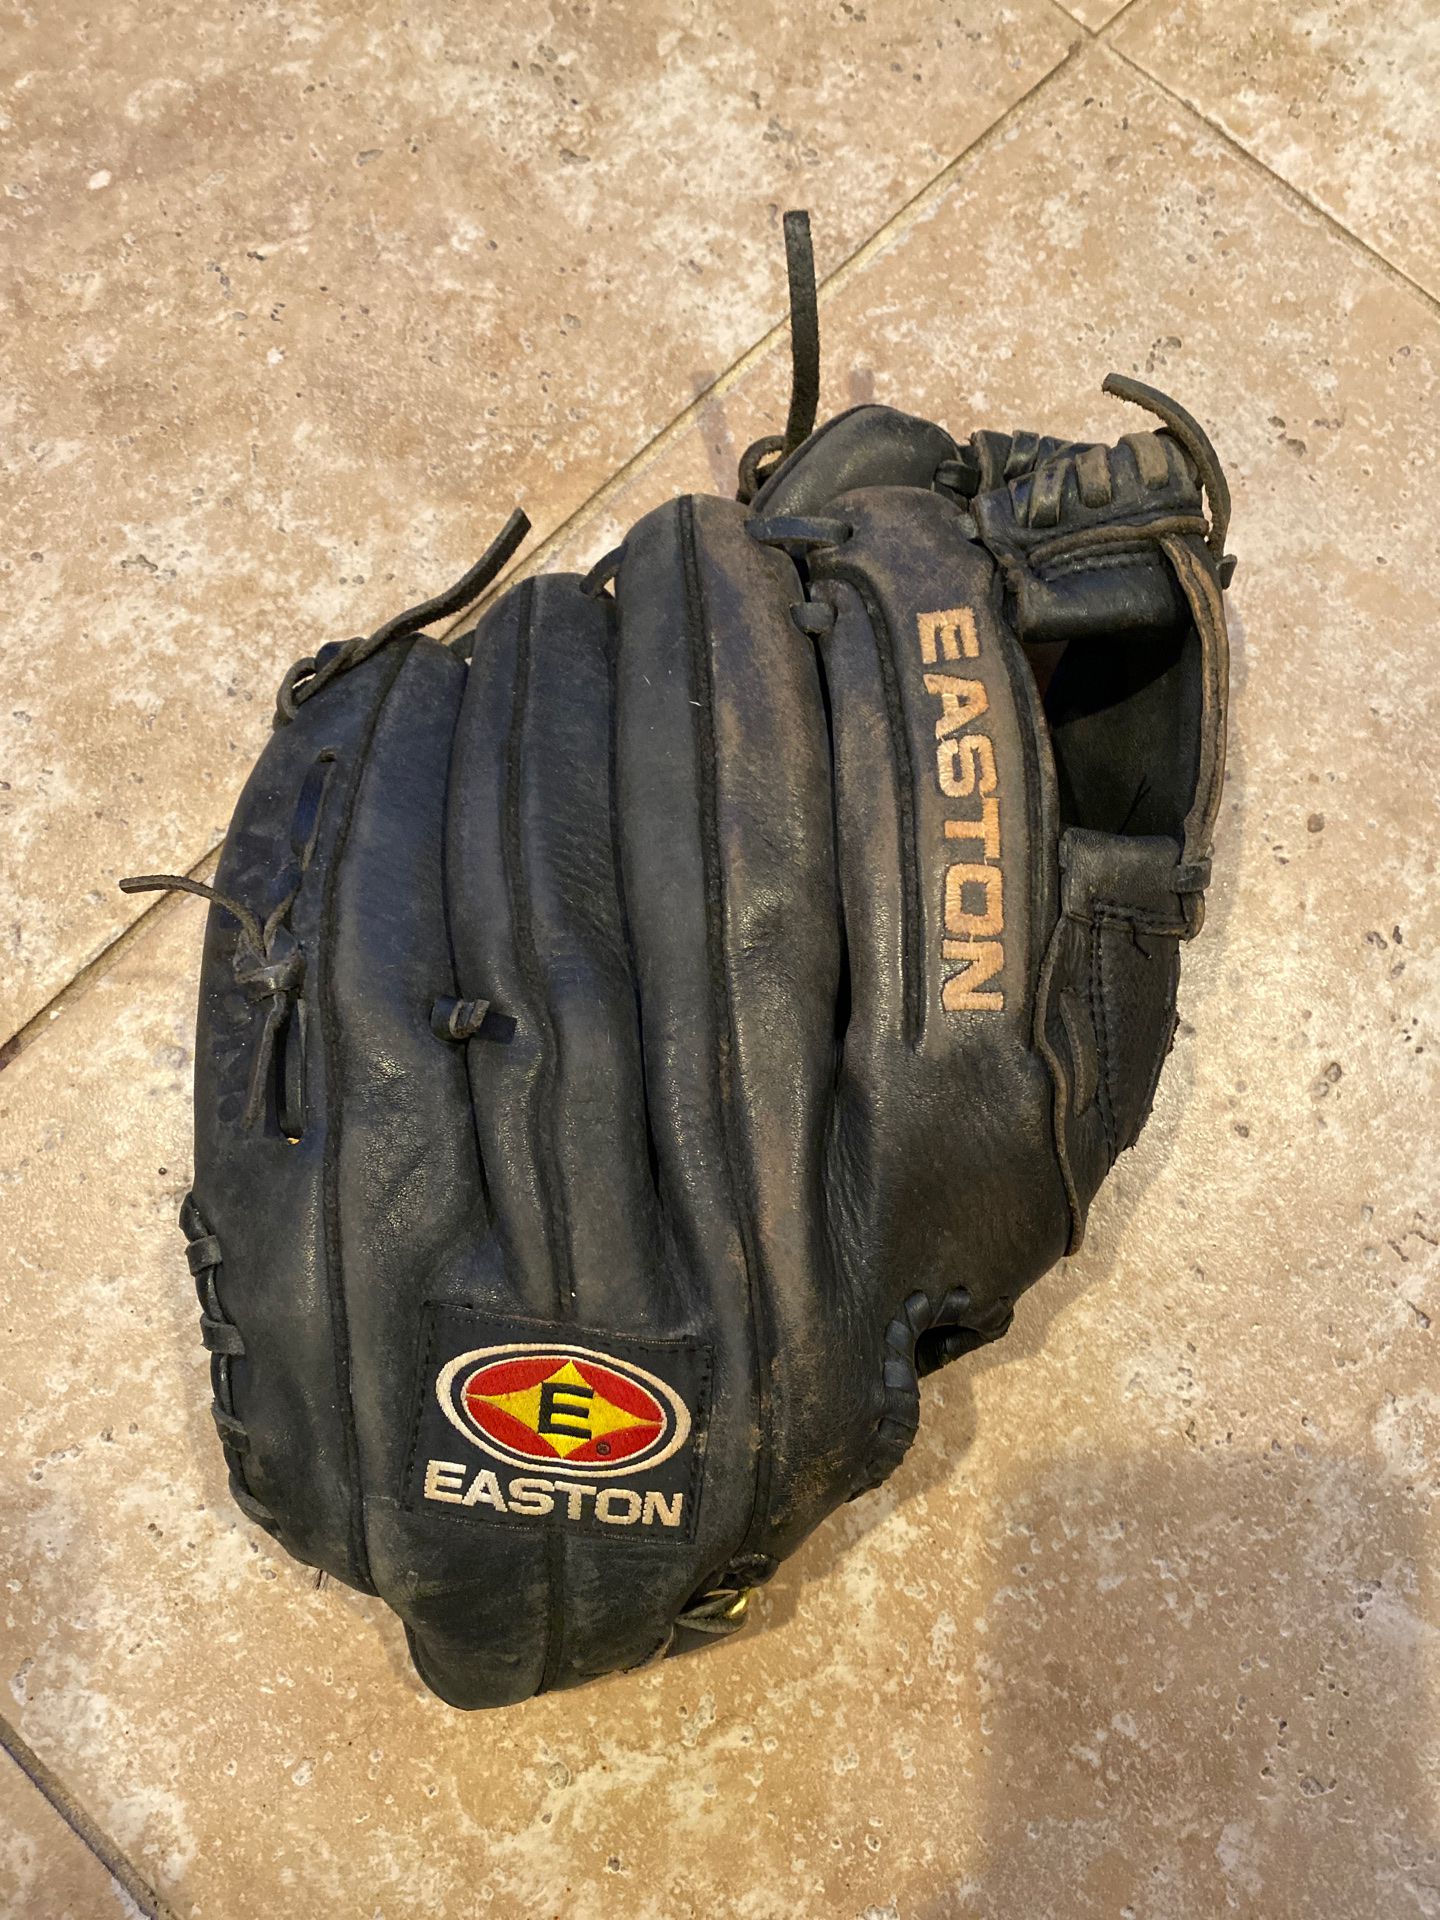 Easton baseball ⚾️ glove 12.5”